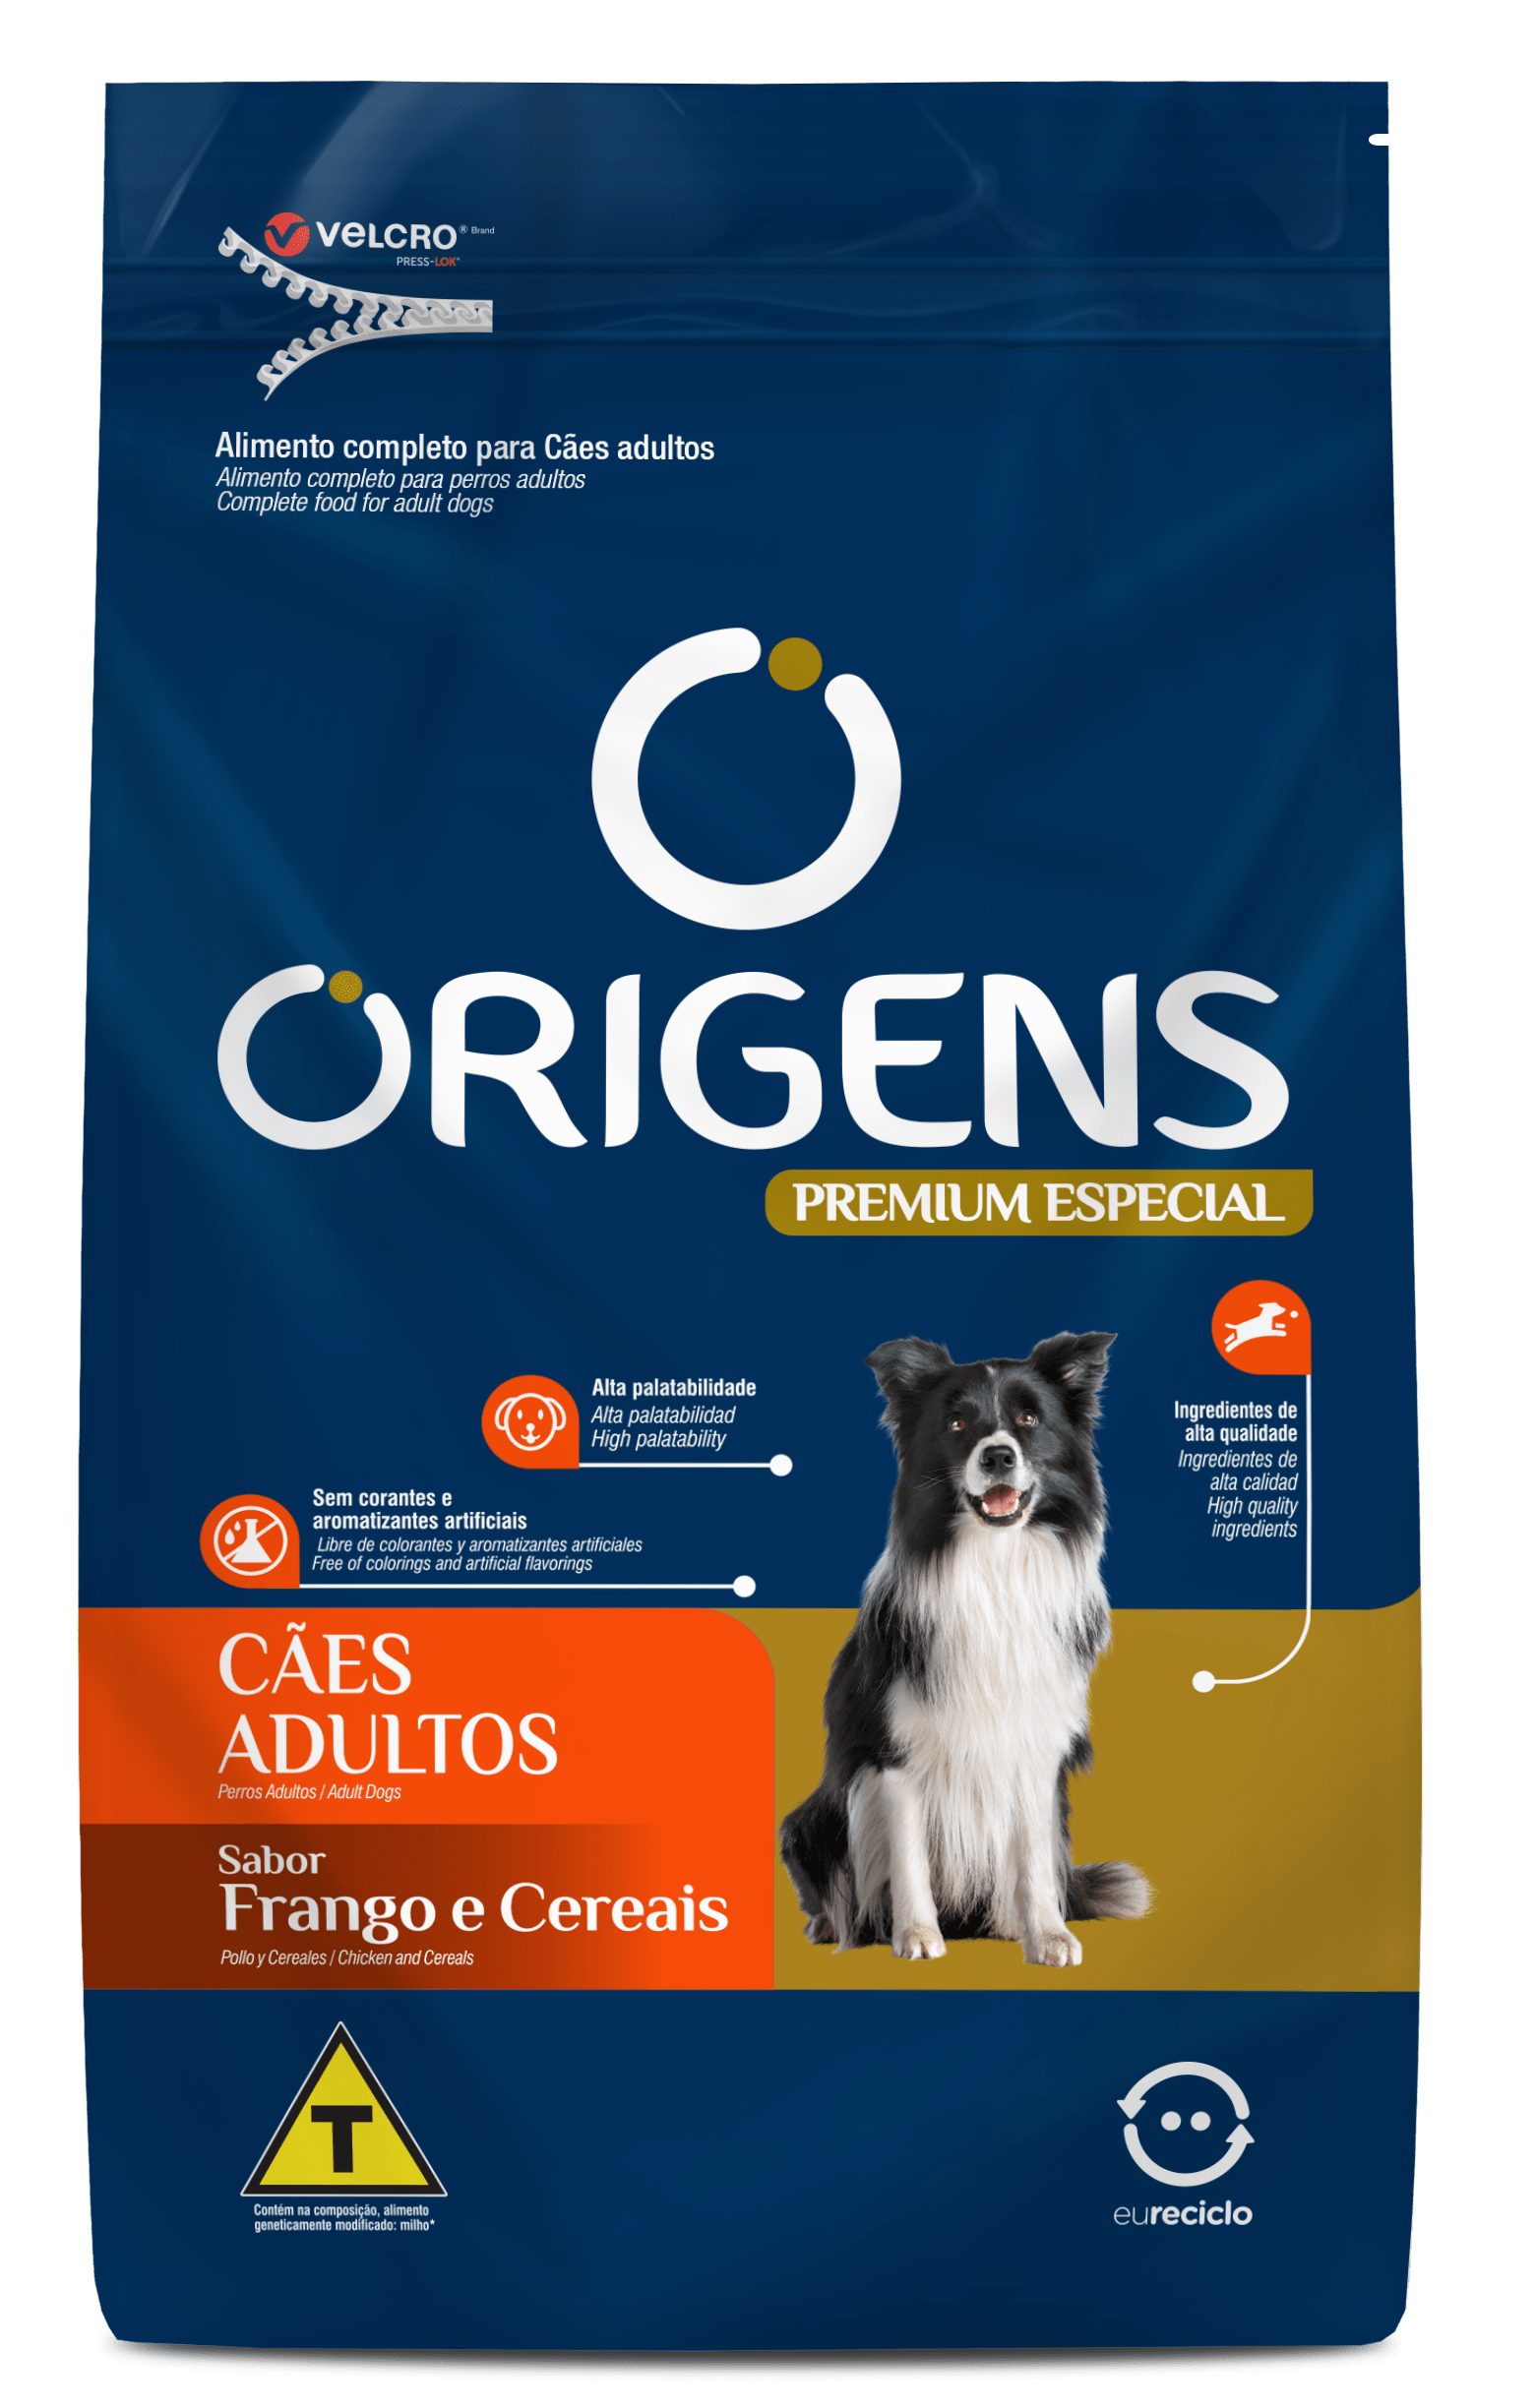 Origens Premium Especial Adult Dogs Chicken and Cereals Flavor